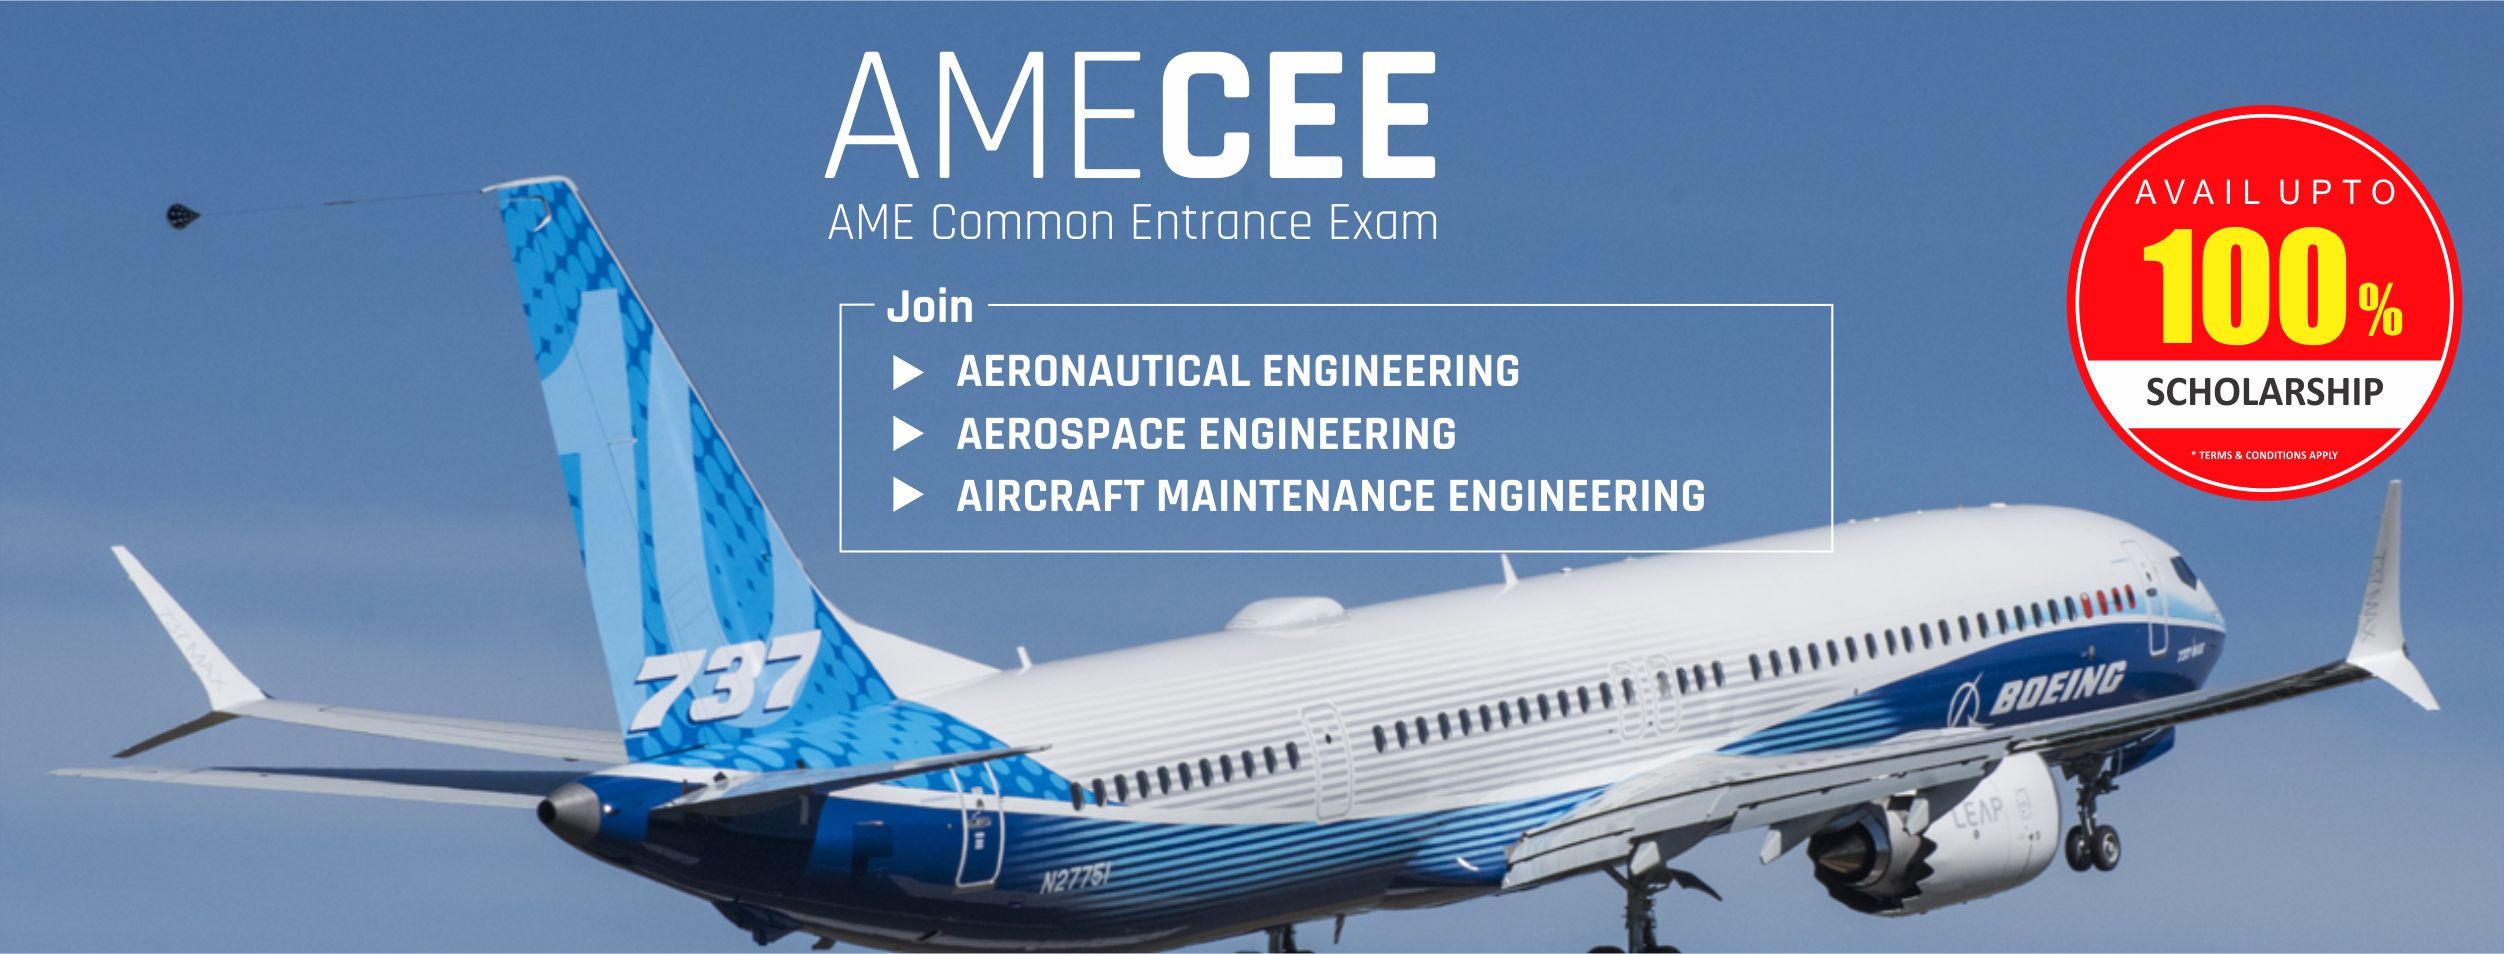 Aircraft Maintenance Engineering, Aeronautical Engineering, and Aerospace Engineering